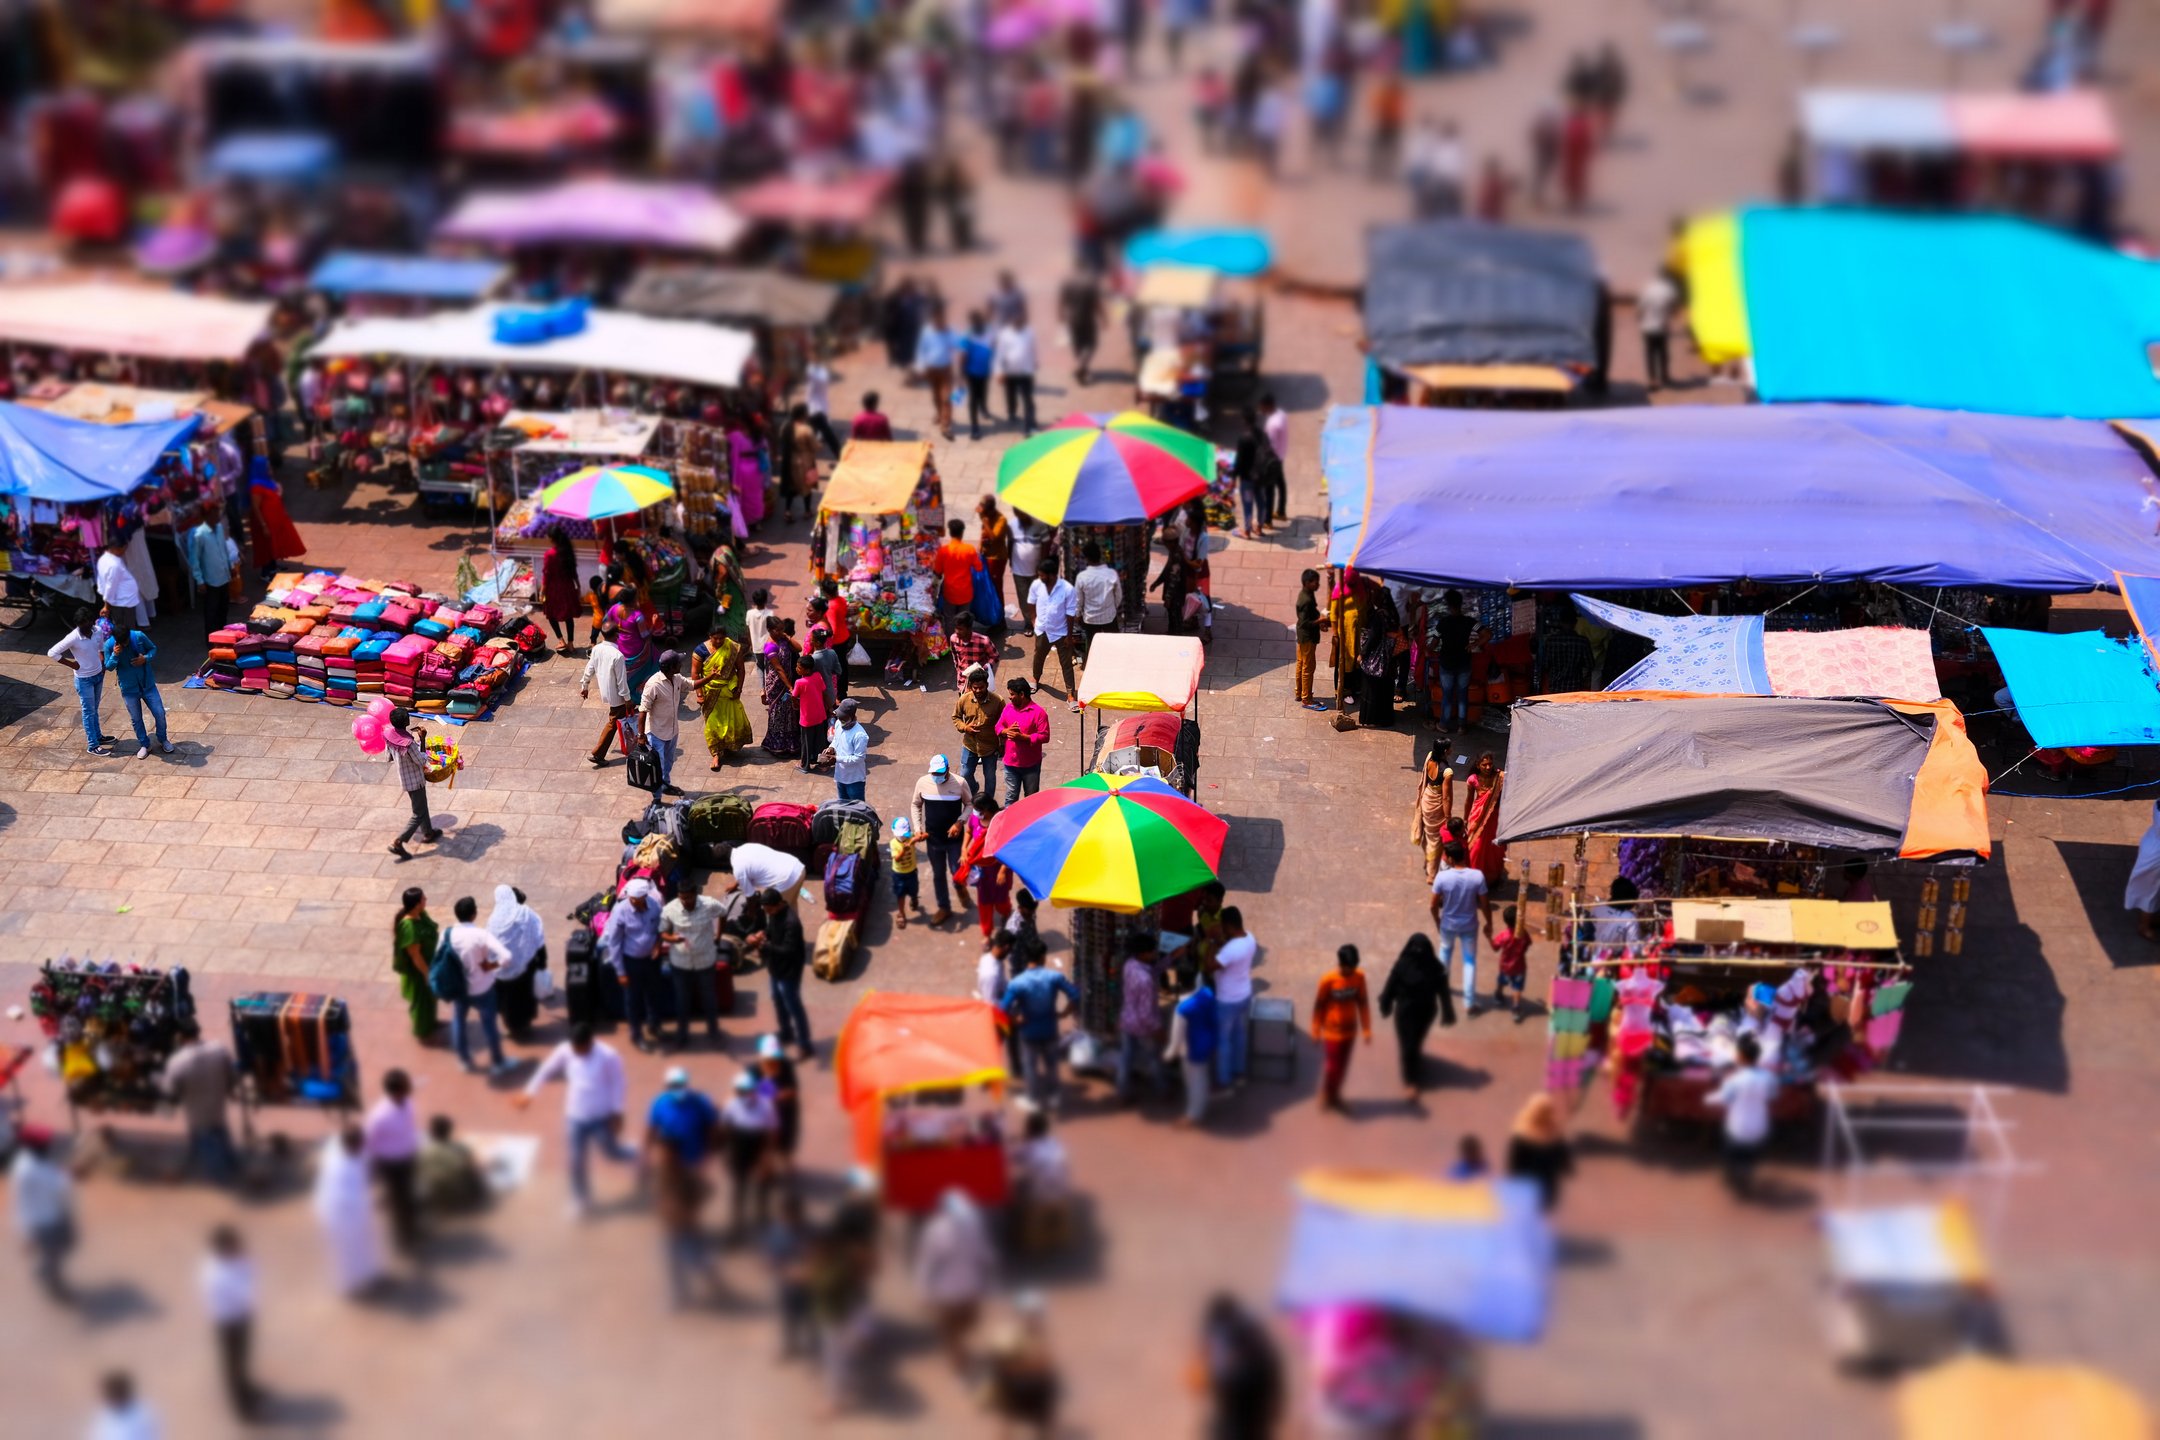 Photos from up in Charminar, pedestrians and market stalls. Tilt